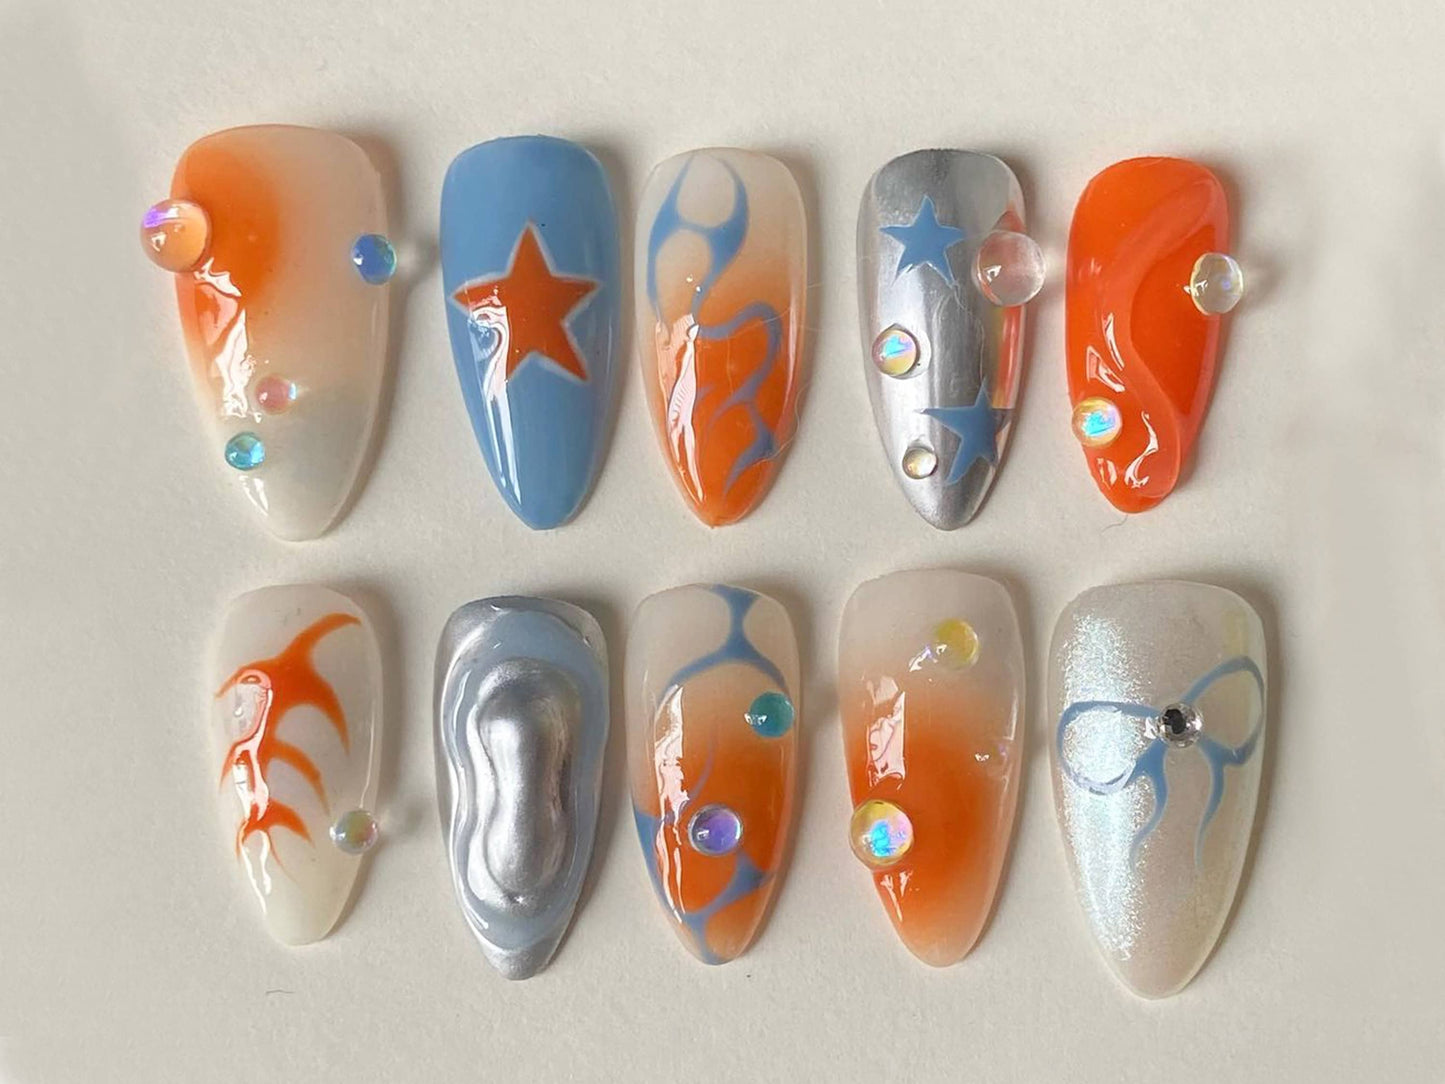 Elegant Orange Press On Nails | Y2k-Inspired Press On Nails| Orange and Blue with Unique Chrome Designs | Gift For Her | J27